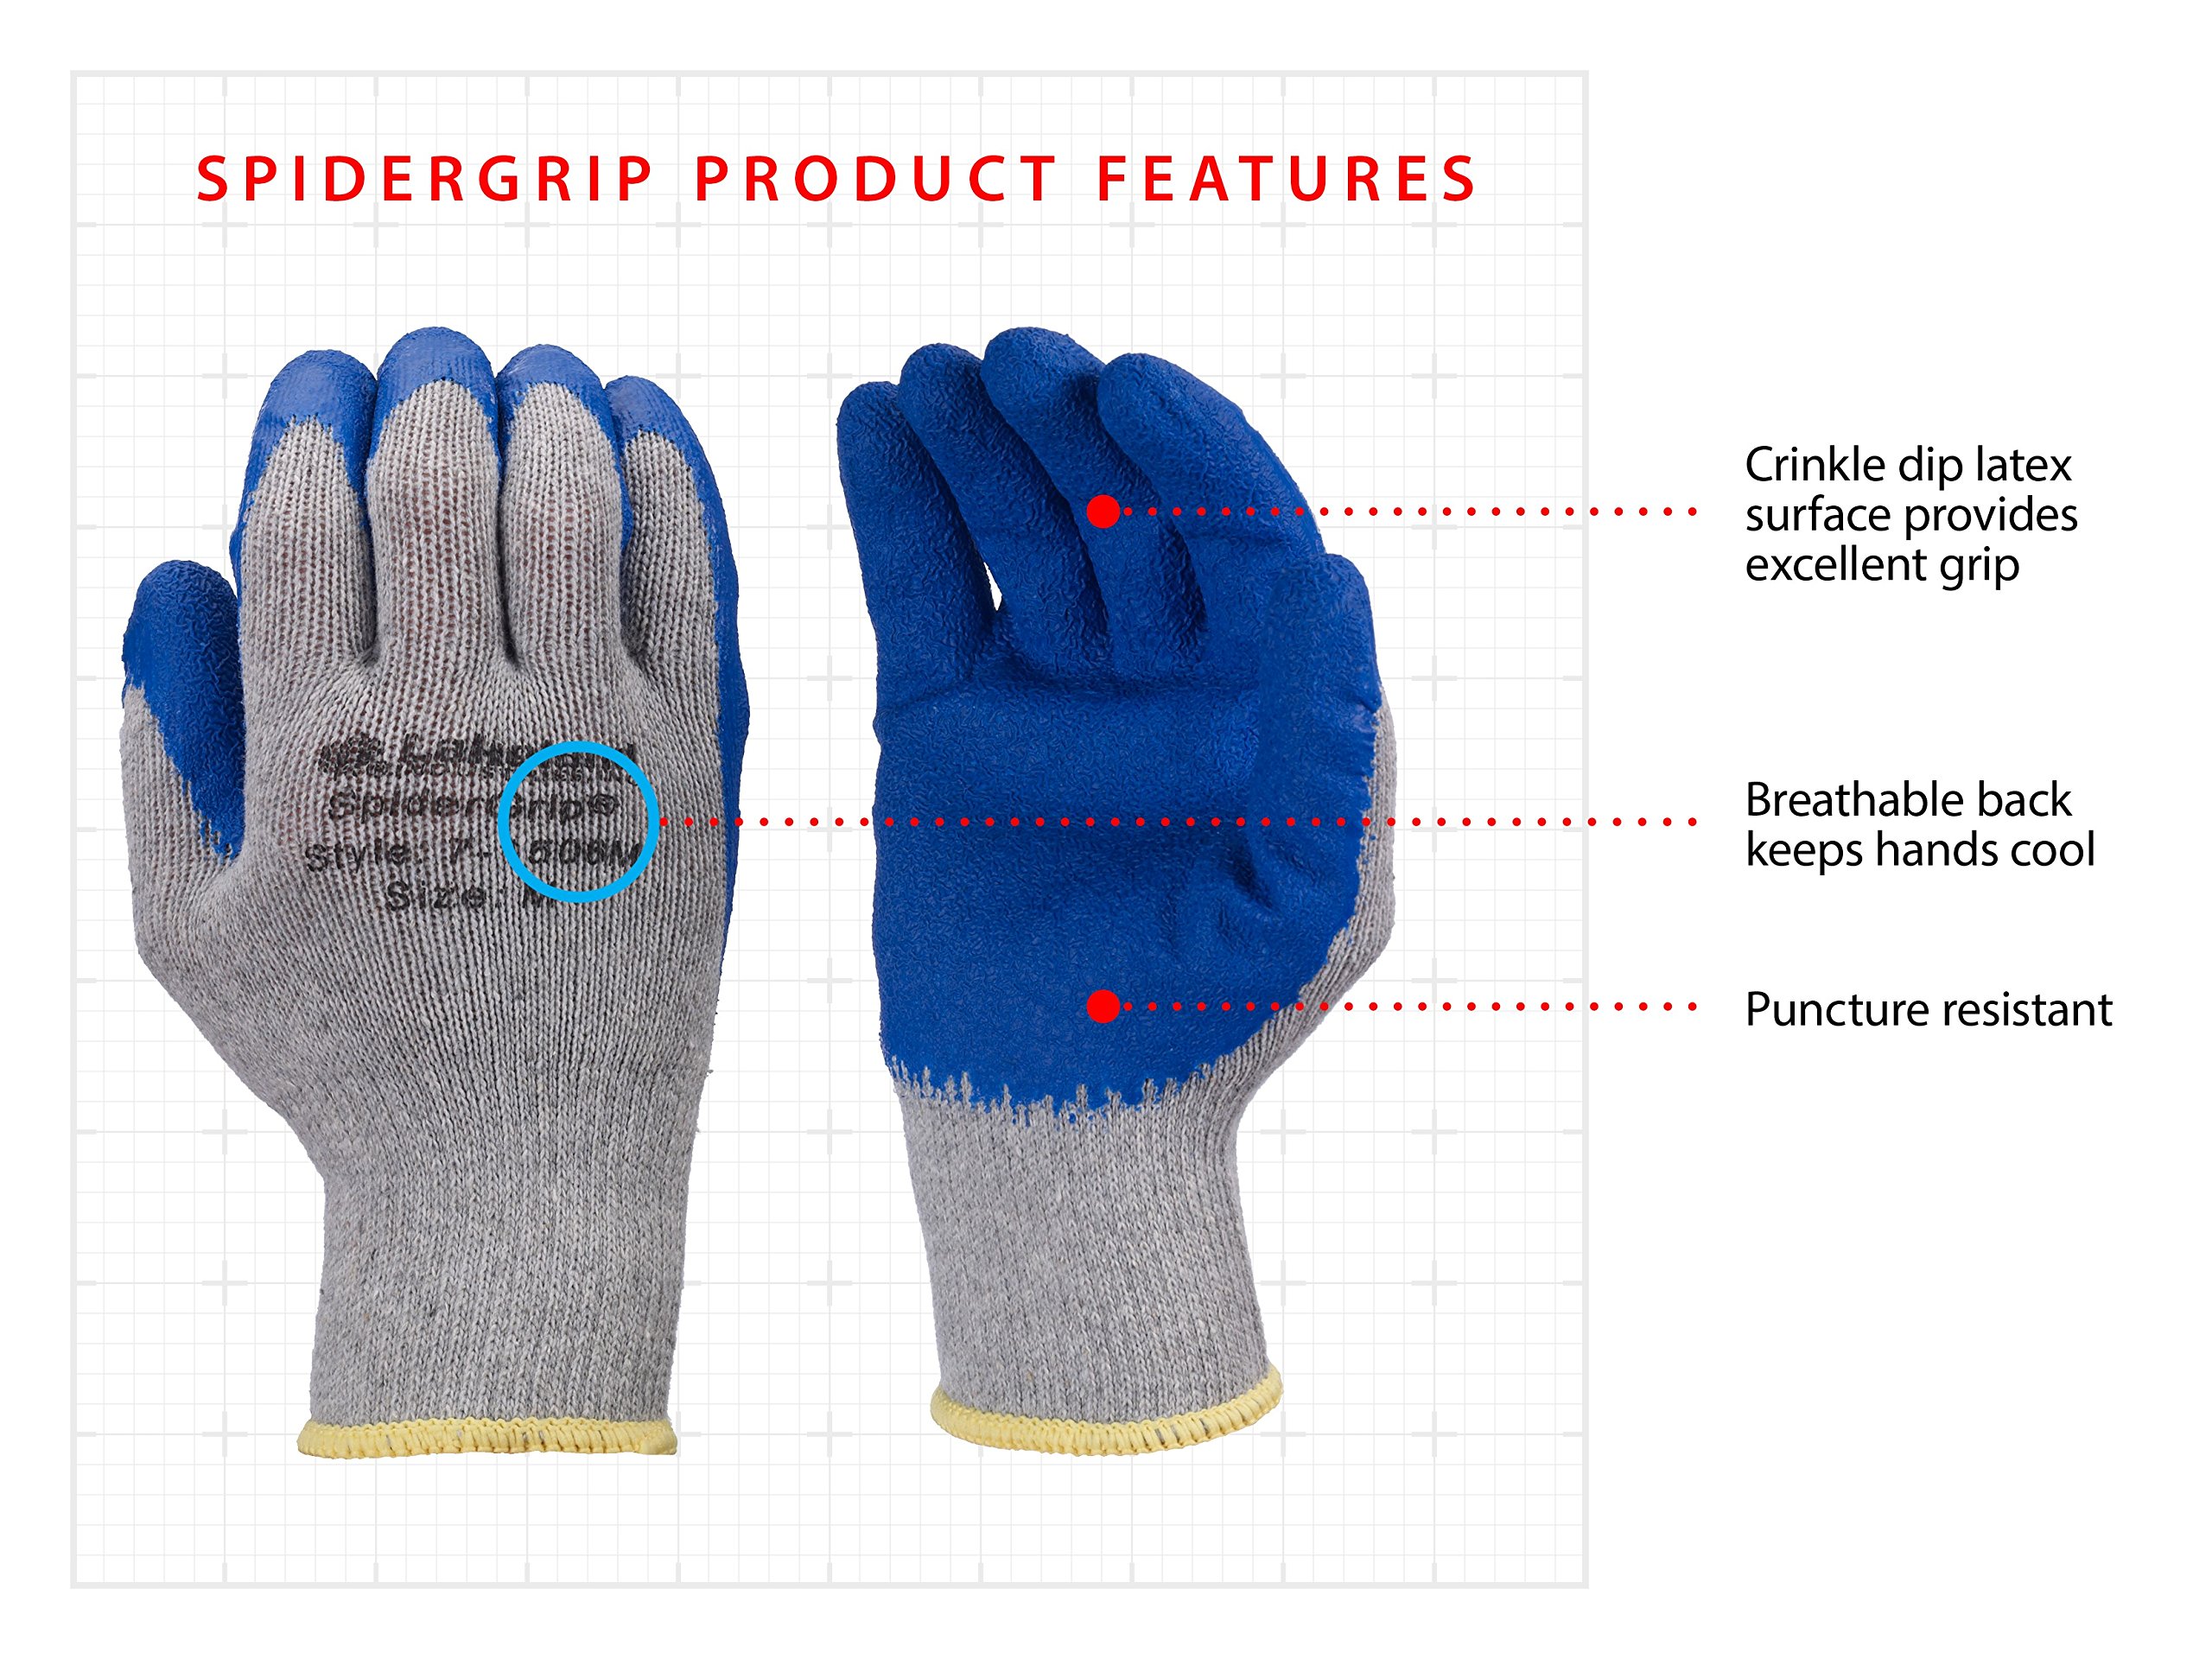 Lakeland SpiderGrip 7-1506 Dipped Latex Coated Palm, Slip Resistant, Knit Work Glove, Grip, Large, Grey/Blue (12 Pair)